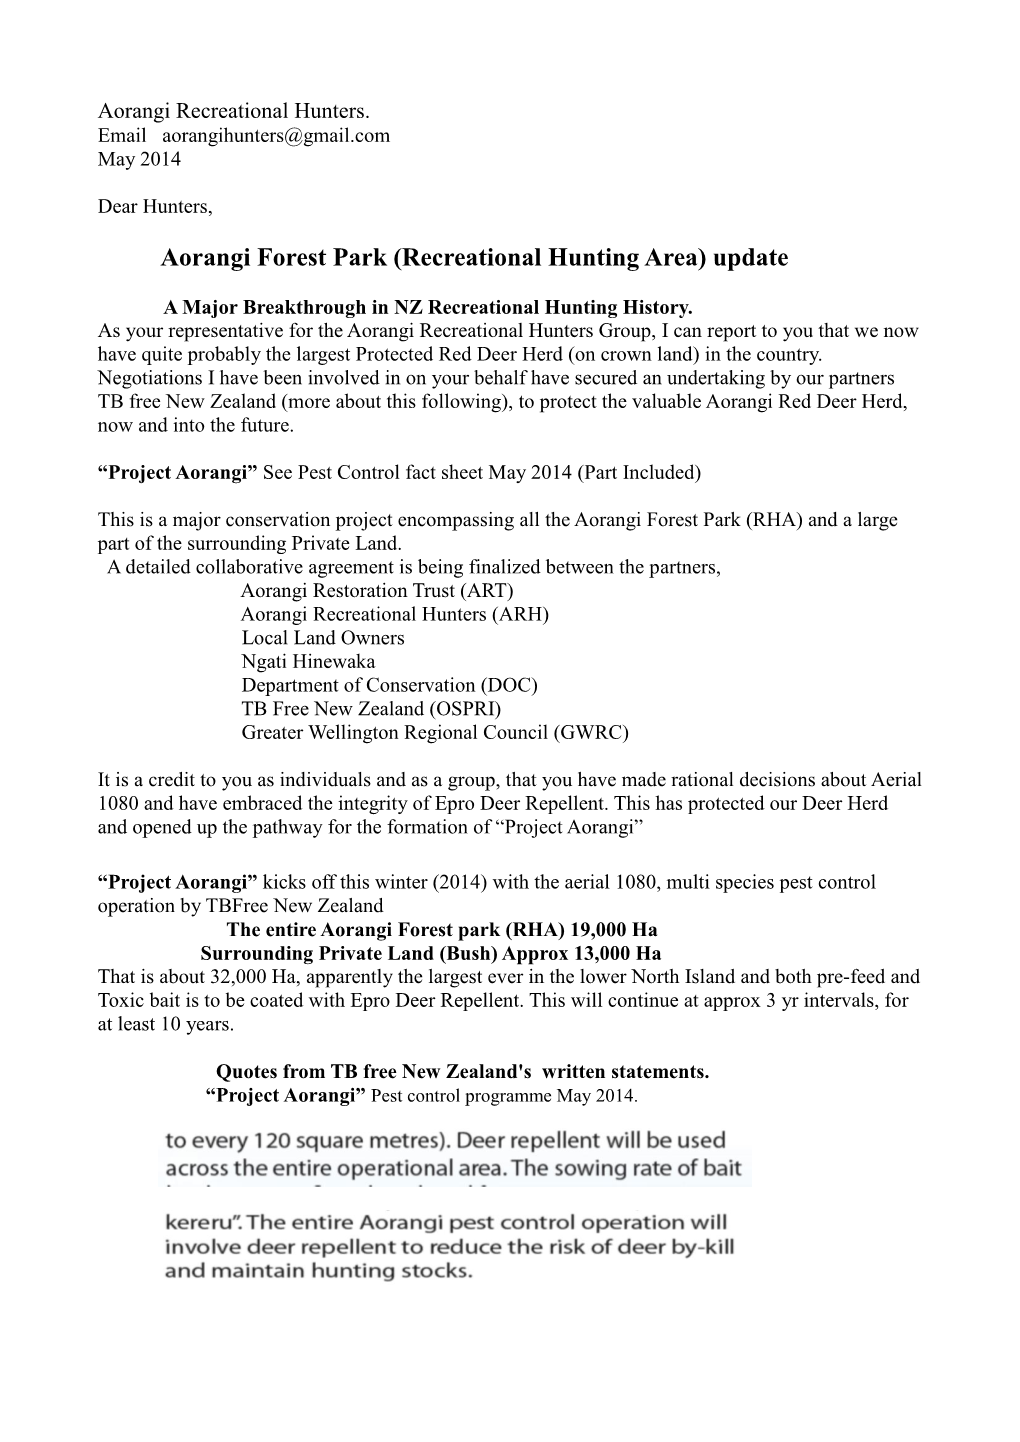 Aorangi Forest Park (Recreational Hunting Area) Update